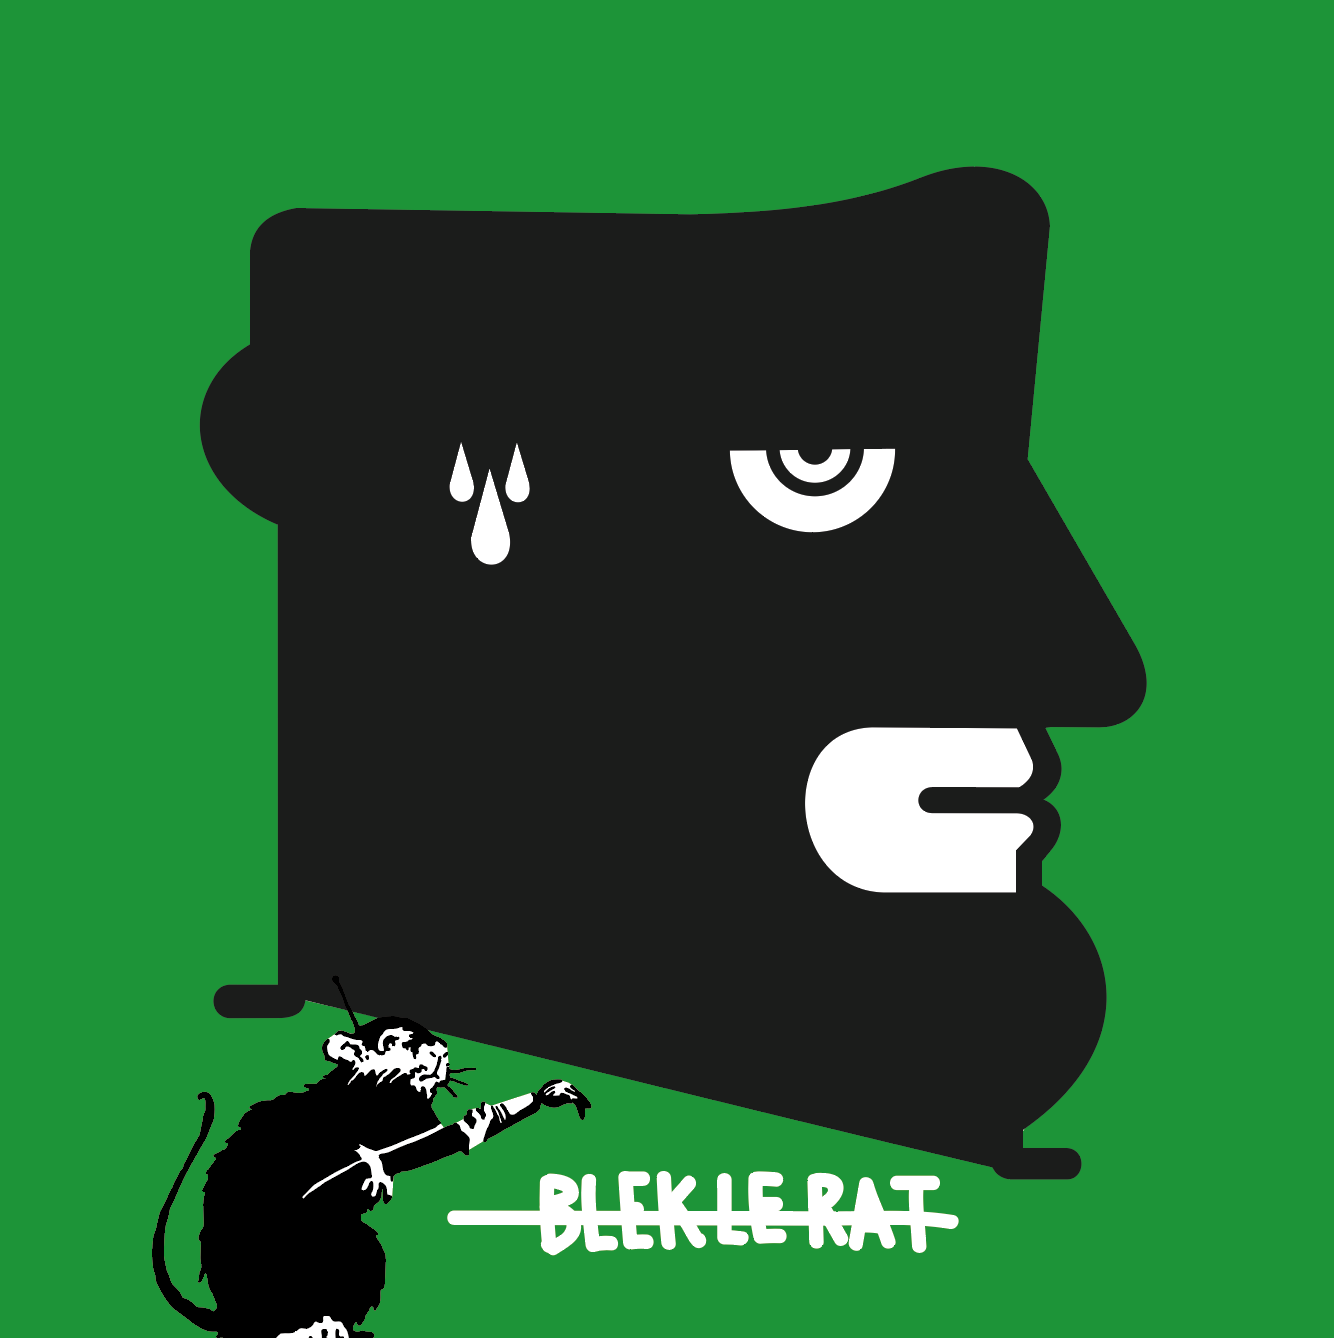 Street War (Banksy VS. Blek Le Rat)